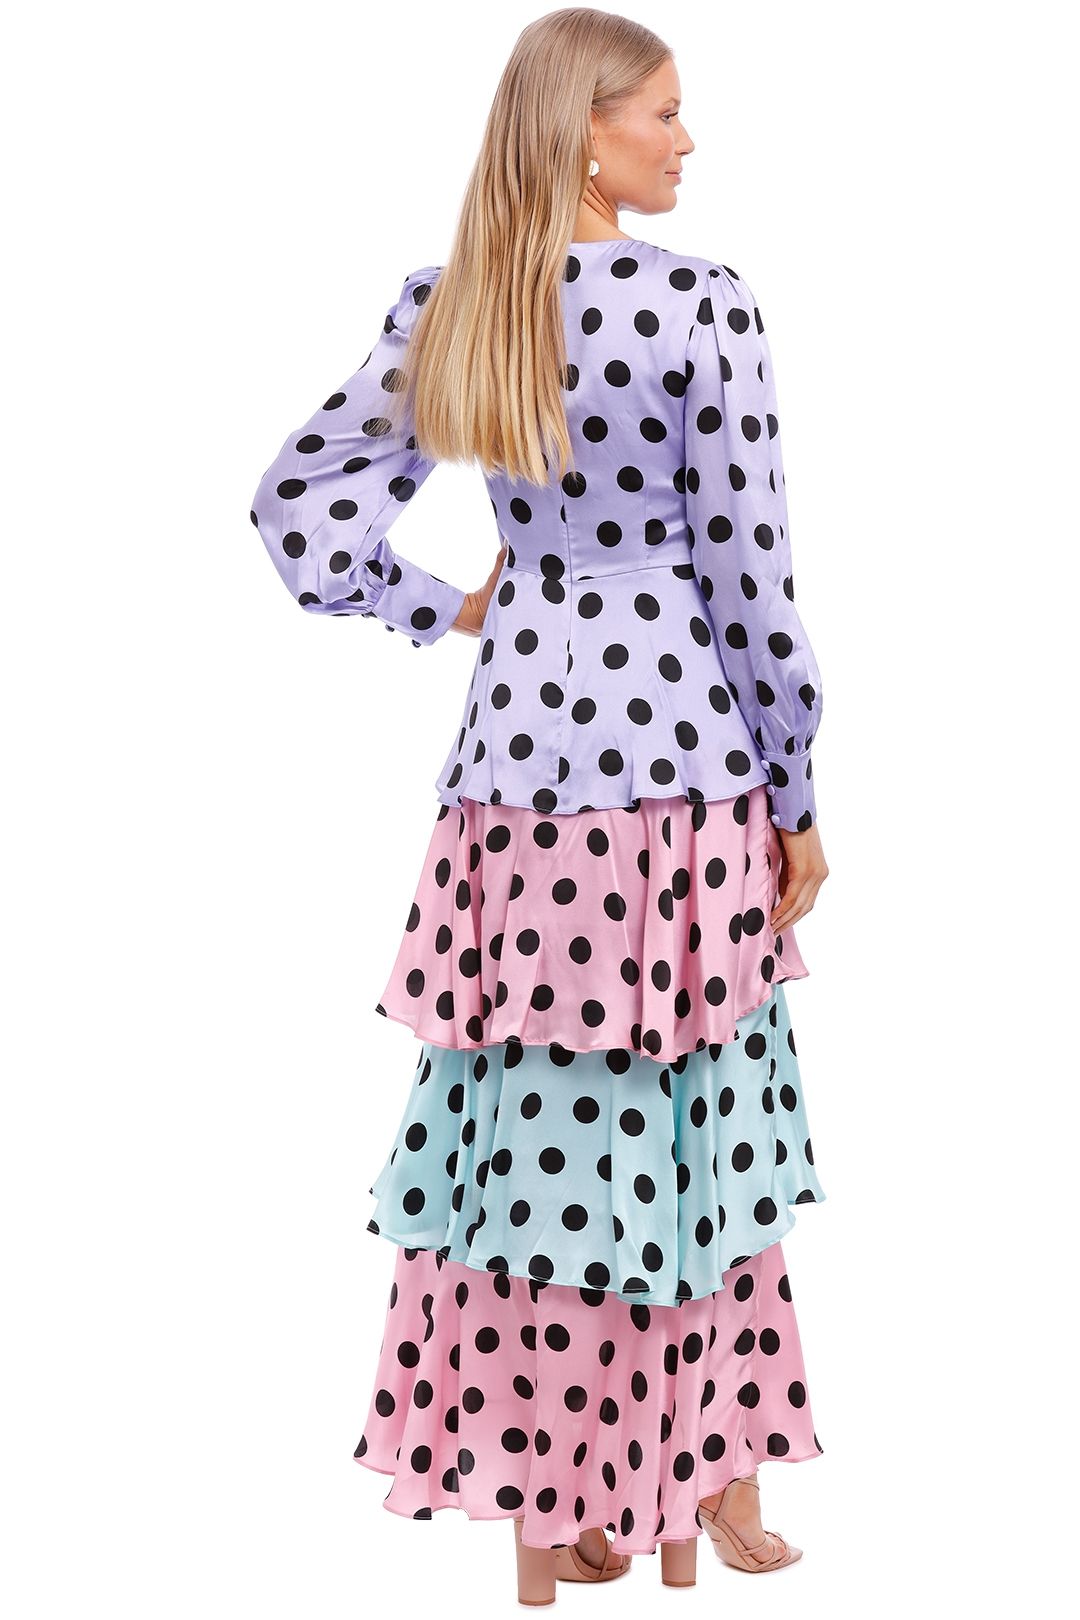 Olivia Rubin Eveline Dress Polka Dot